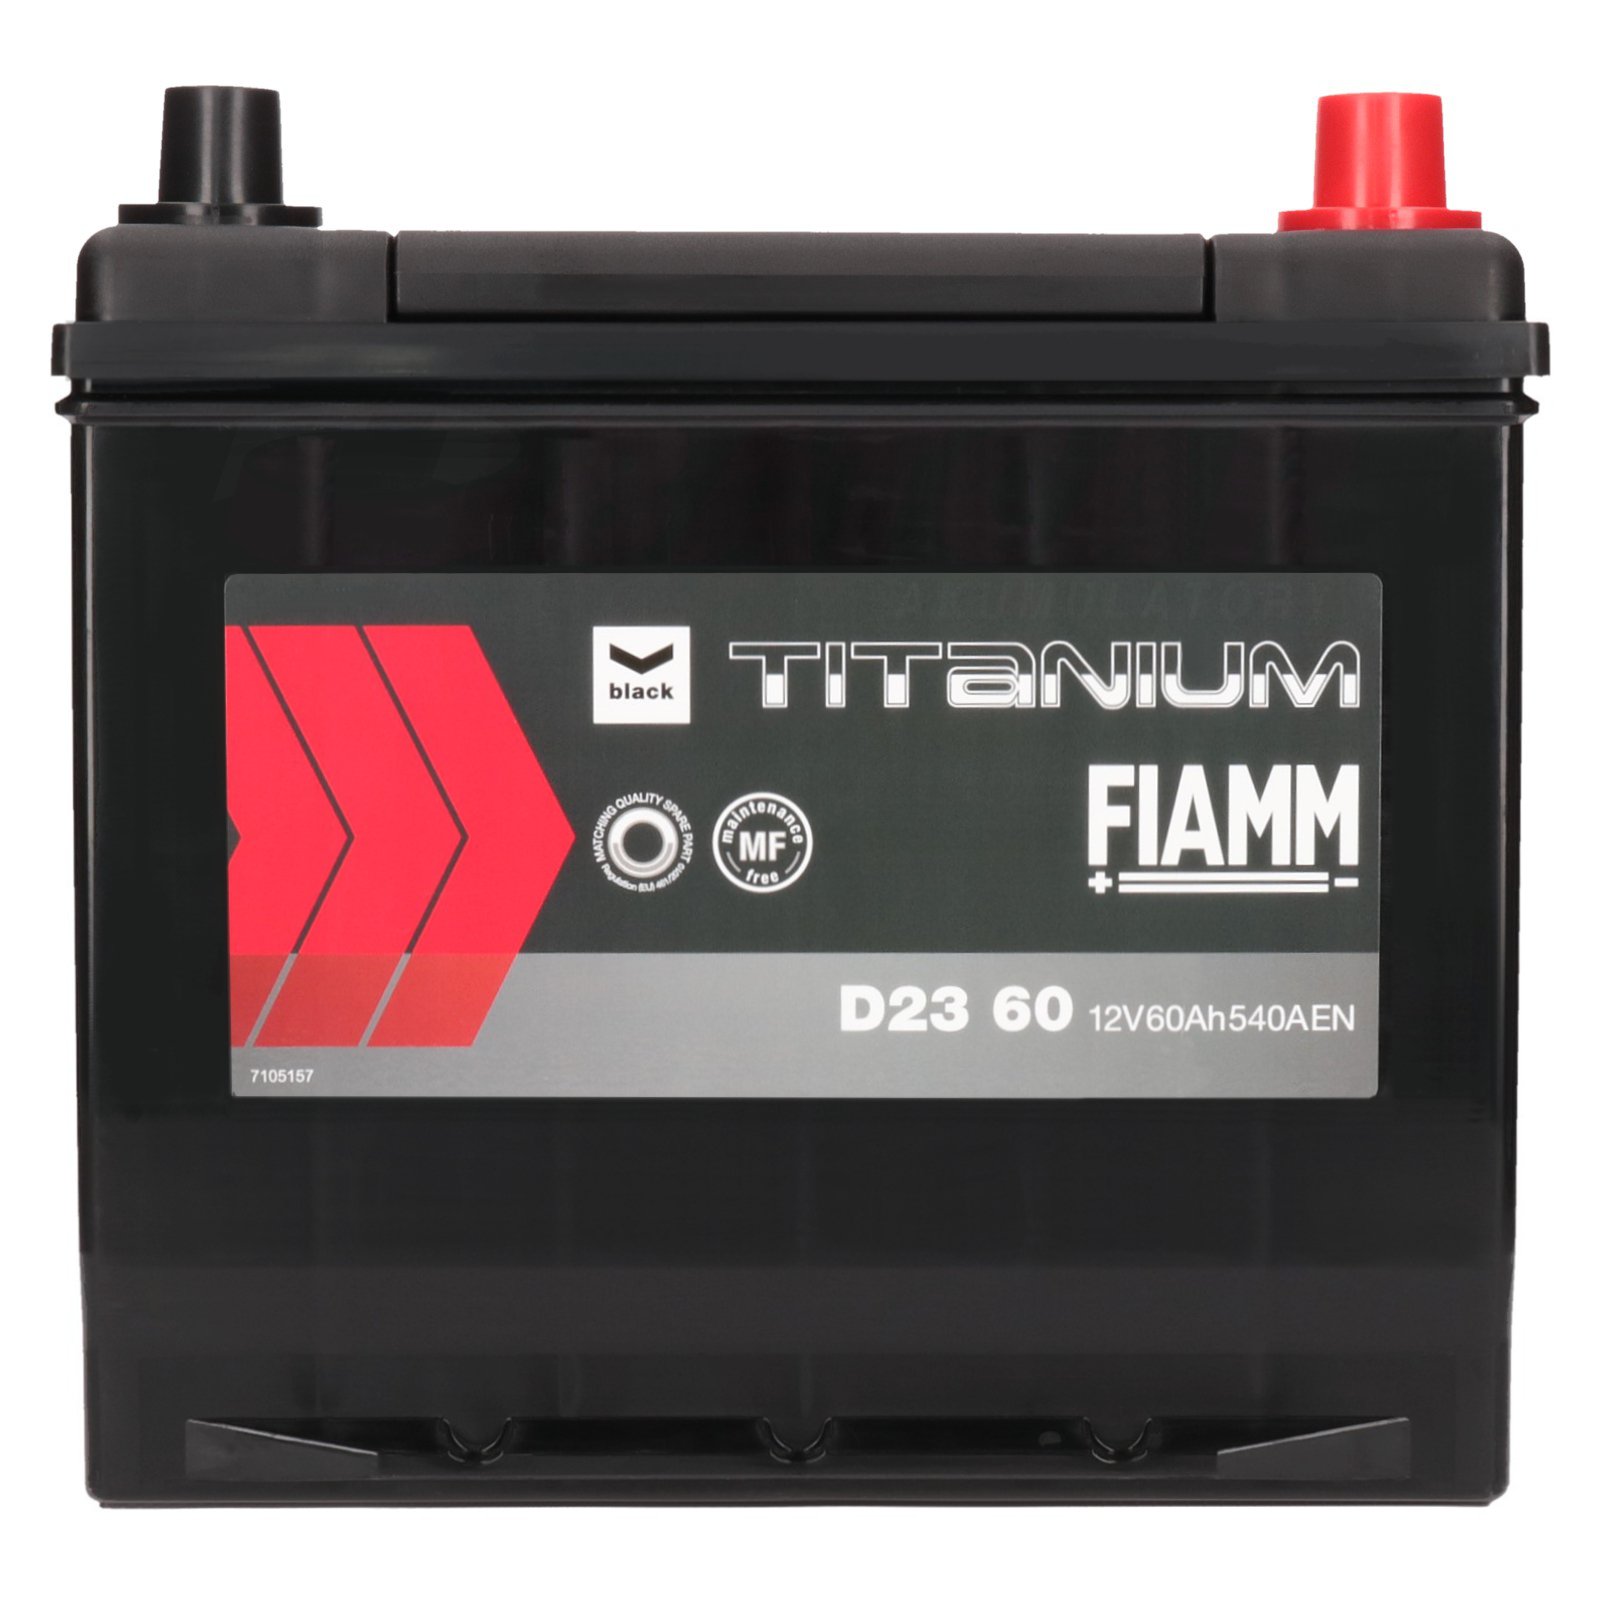 Akumulator FIAMM BLACK D2360 12V 60Ah 540A (EN) JFTP60 za 470 zł z Zielona  Góra -  - (6802439221)